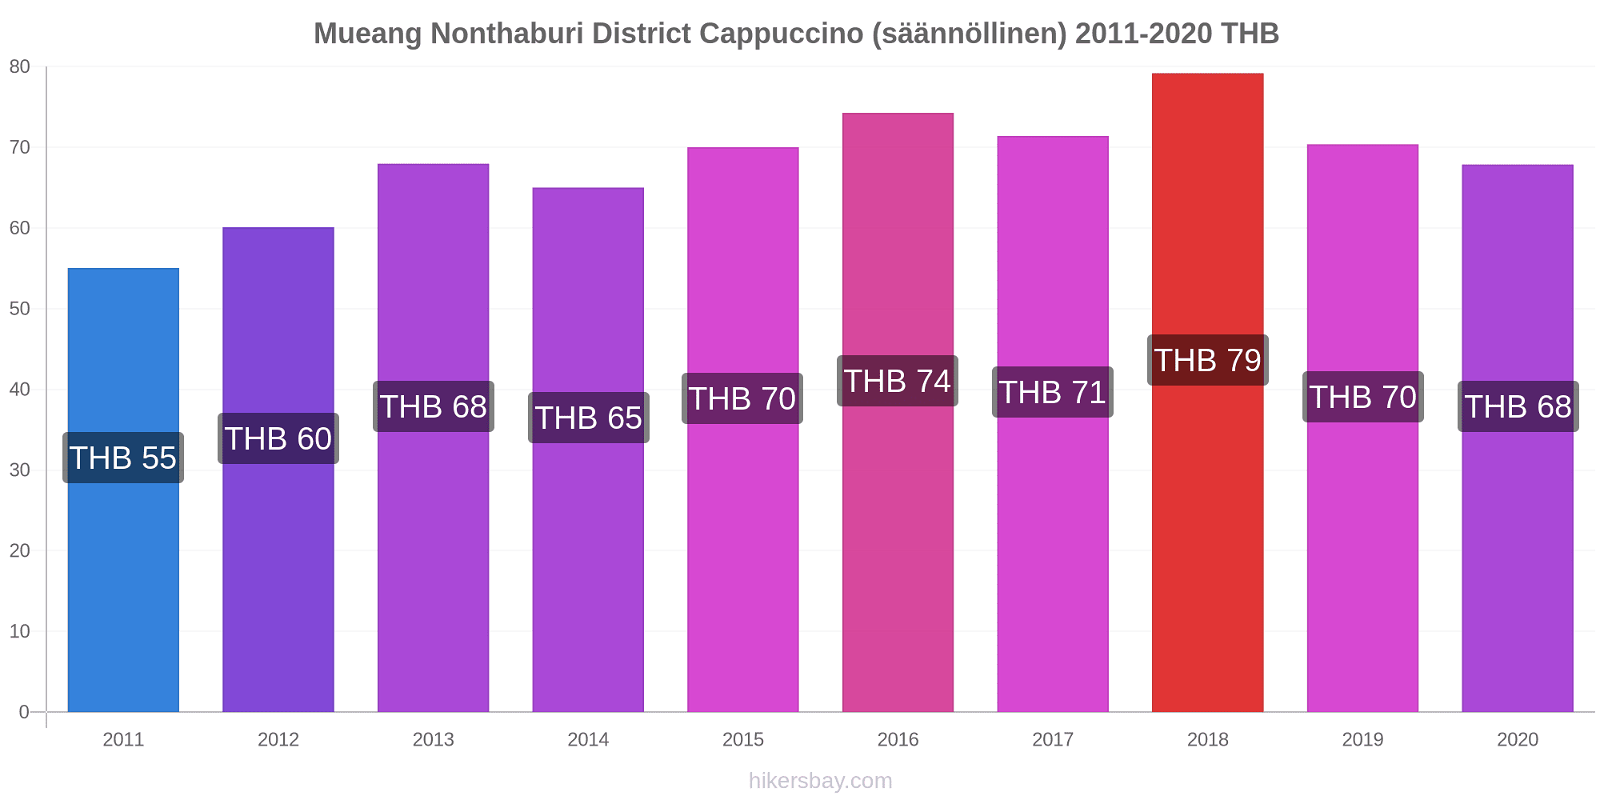 Mueang Nonthaburi District hintojen muutokset Cappuccino (säännöllinen) hikersbay.com